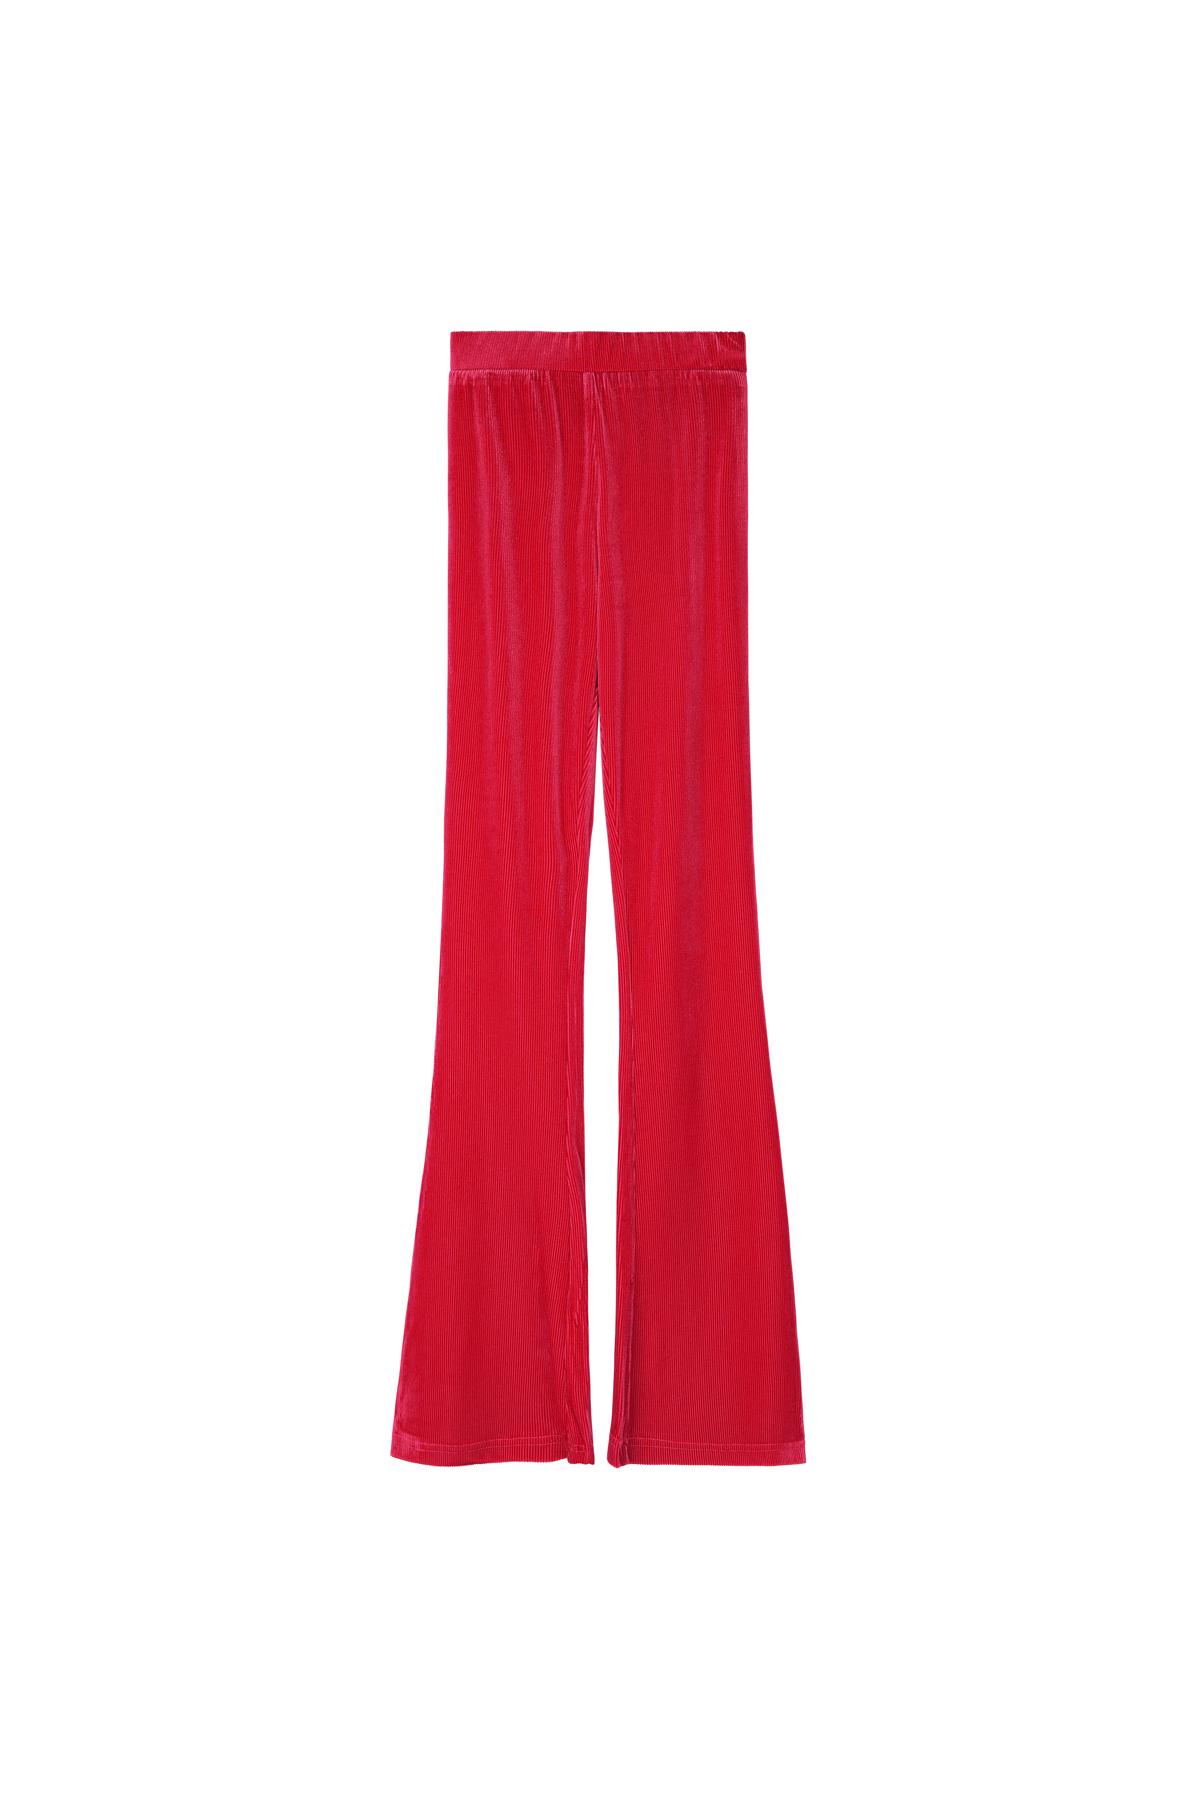 Rojo / S / Pantalones Century Rojo S 